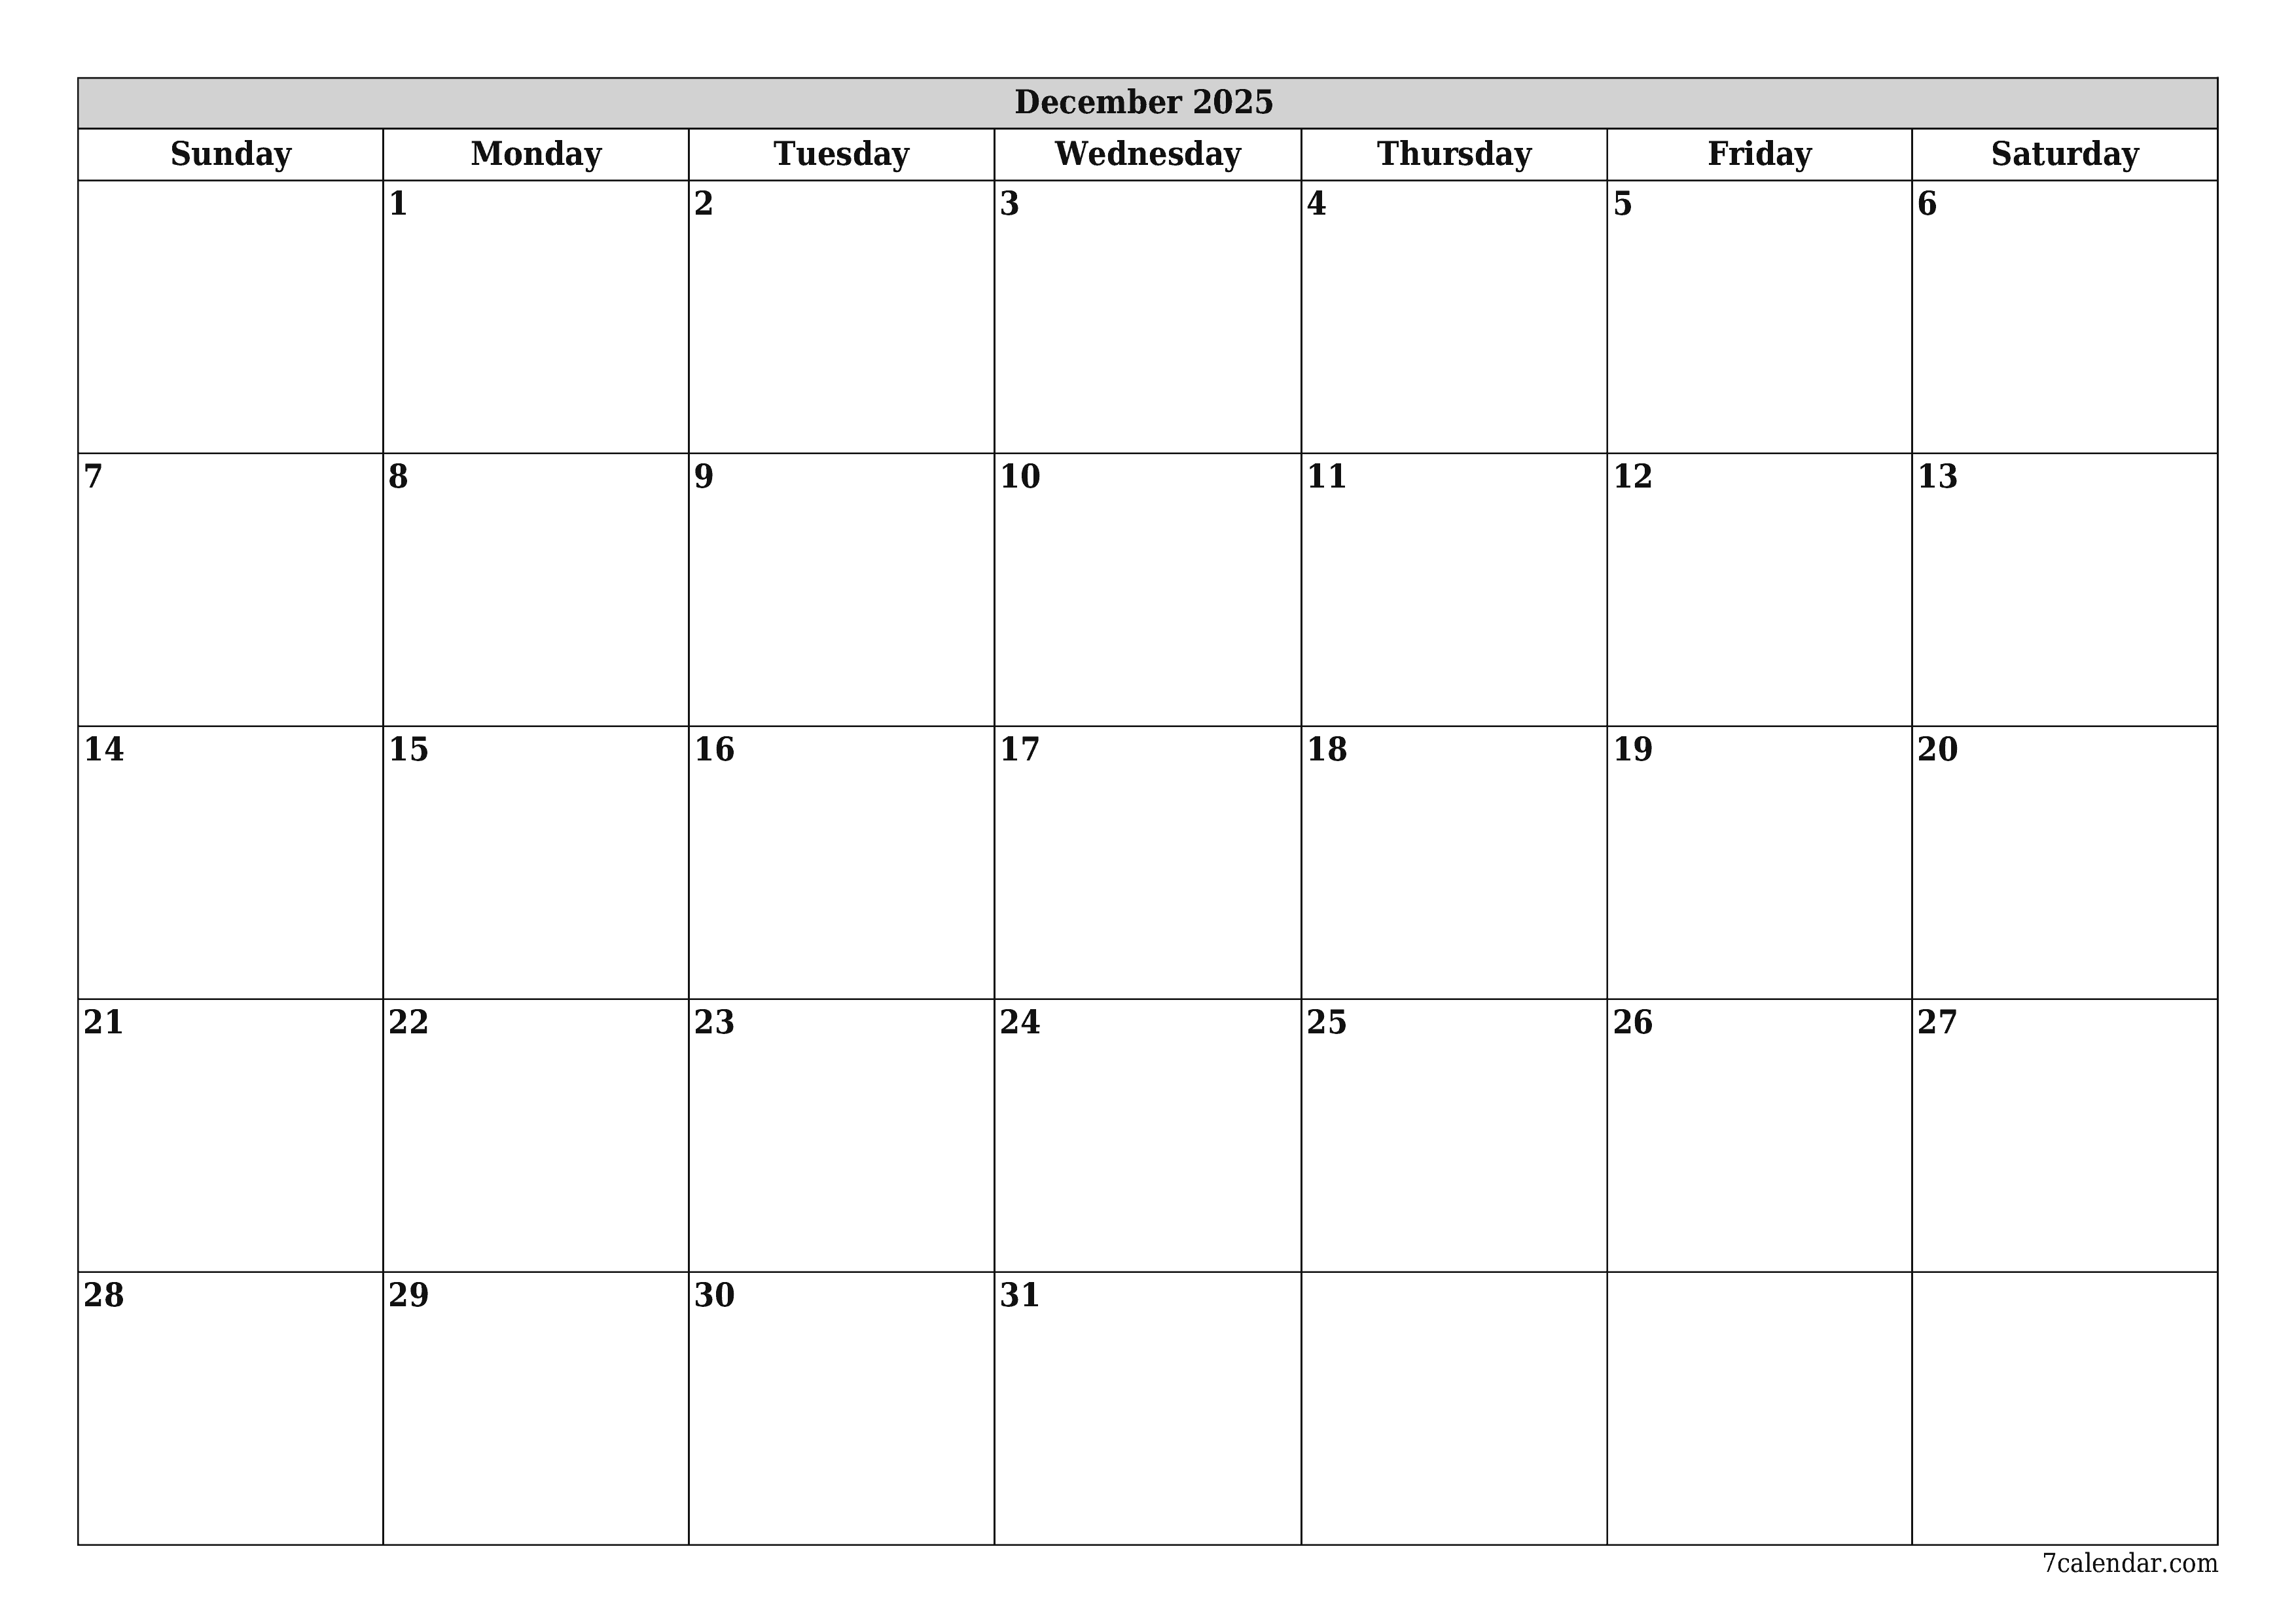 printable wall template free horizontal Monthly planner calendar December (Dec) 2025